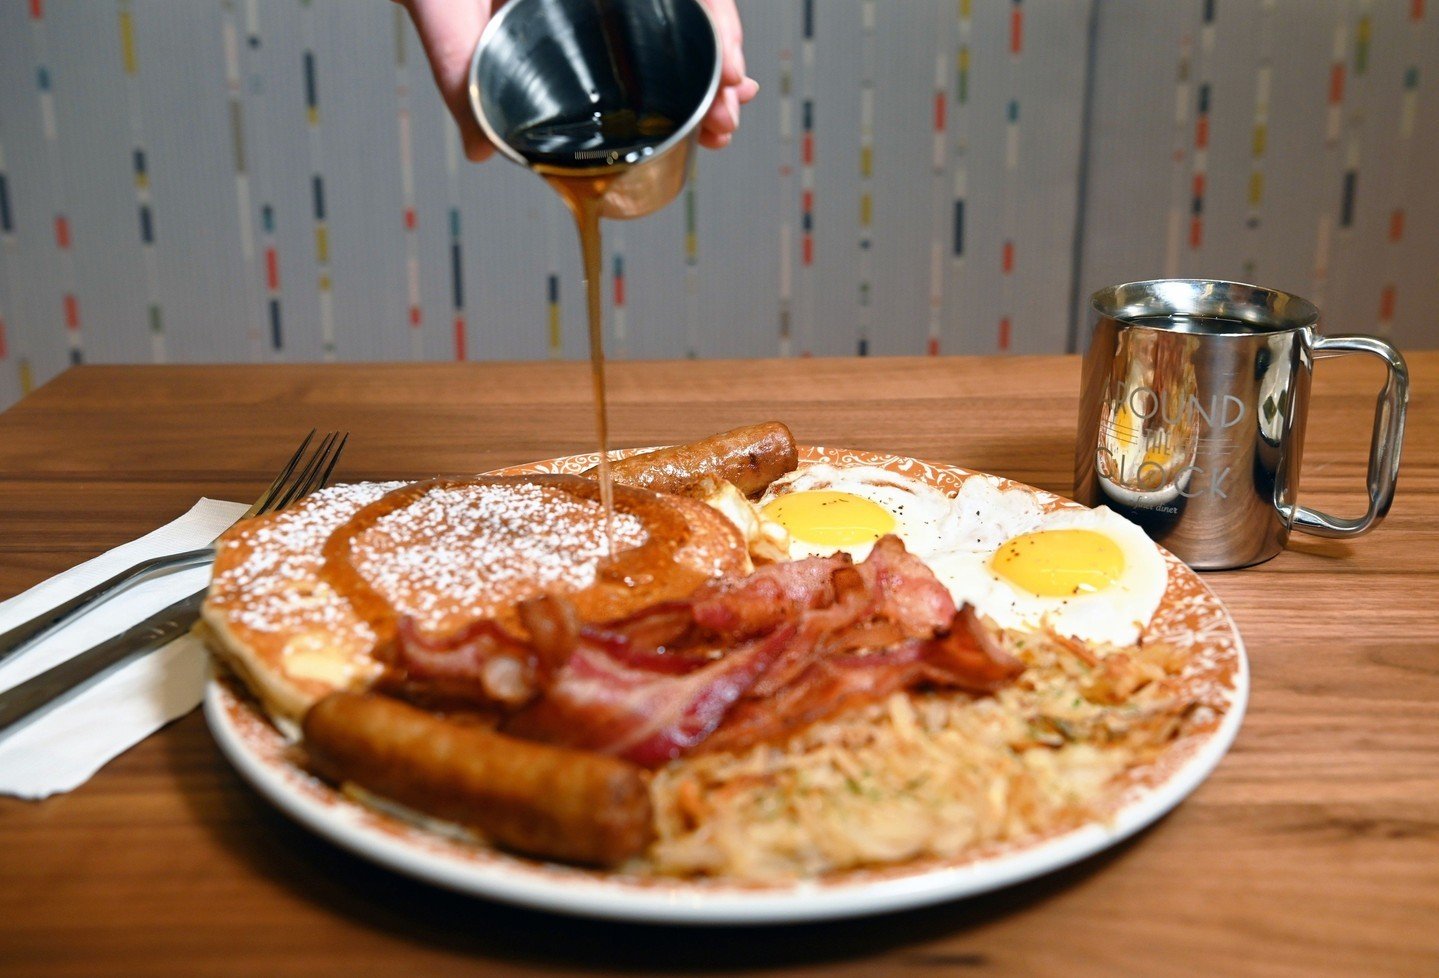 We love liquid gold (aka maple syrup) to top off your pancakes 😍🍁⁠🥞⁠
.⁠
.⁠
.⁠
#atcdiner #aroundtheclockdiner #diner #NJdiner #americandream #americandreammall #newopenings #newopeningsnj #breakfast #njdining #201magazine #northjerseyeats #pancakes